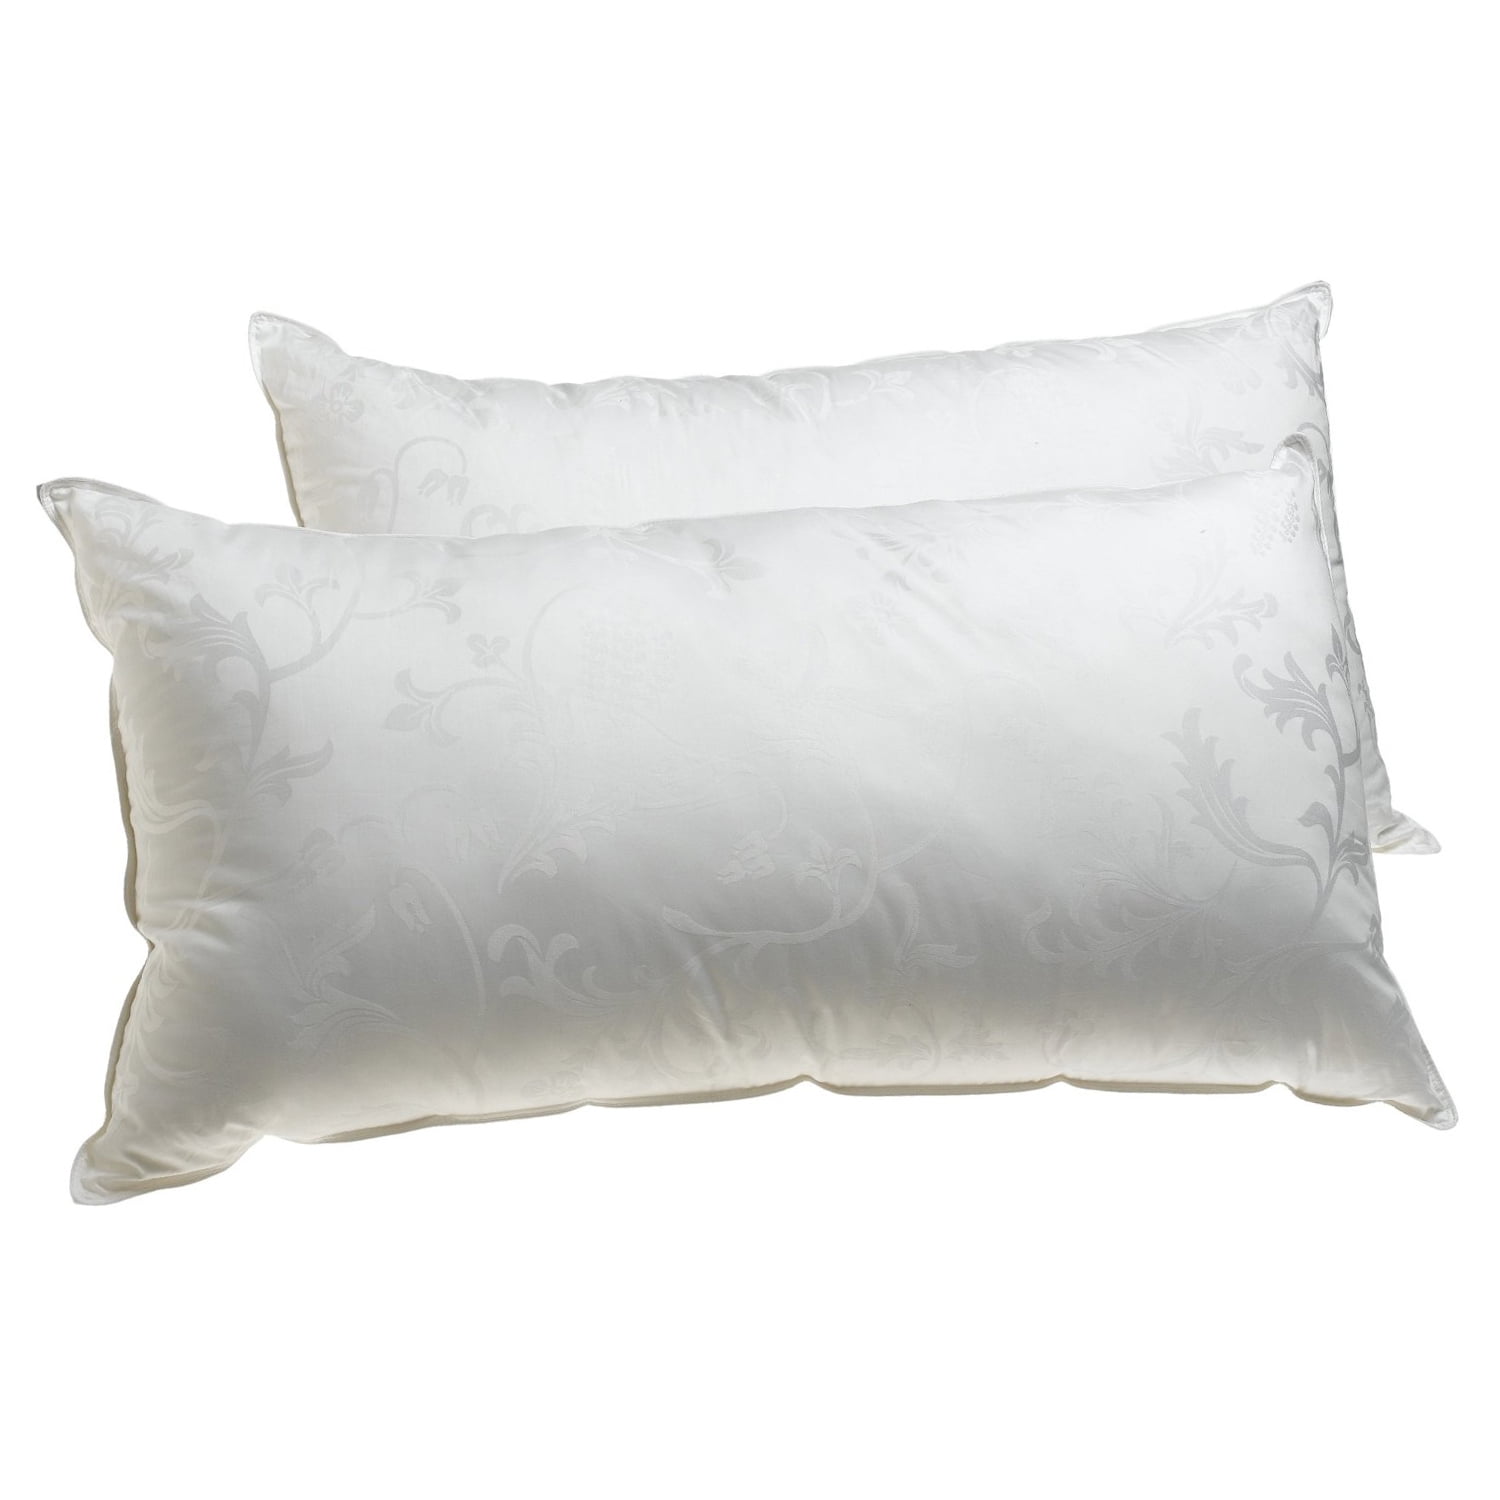 Envirosleep Dream Surrender II Jumbo Size Pillow